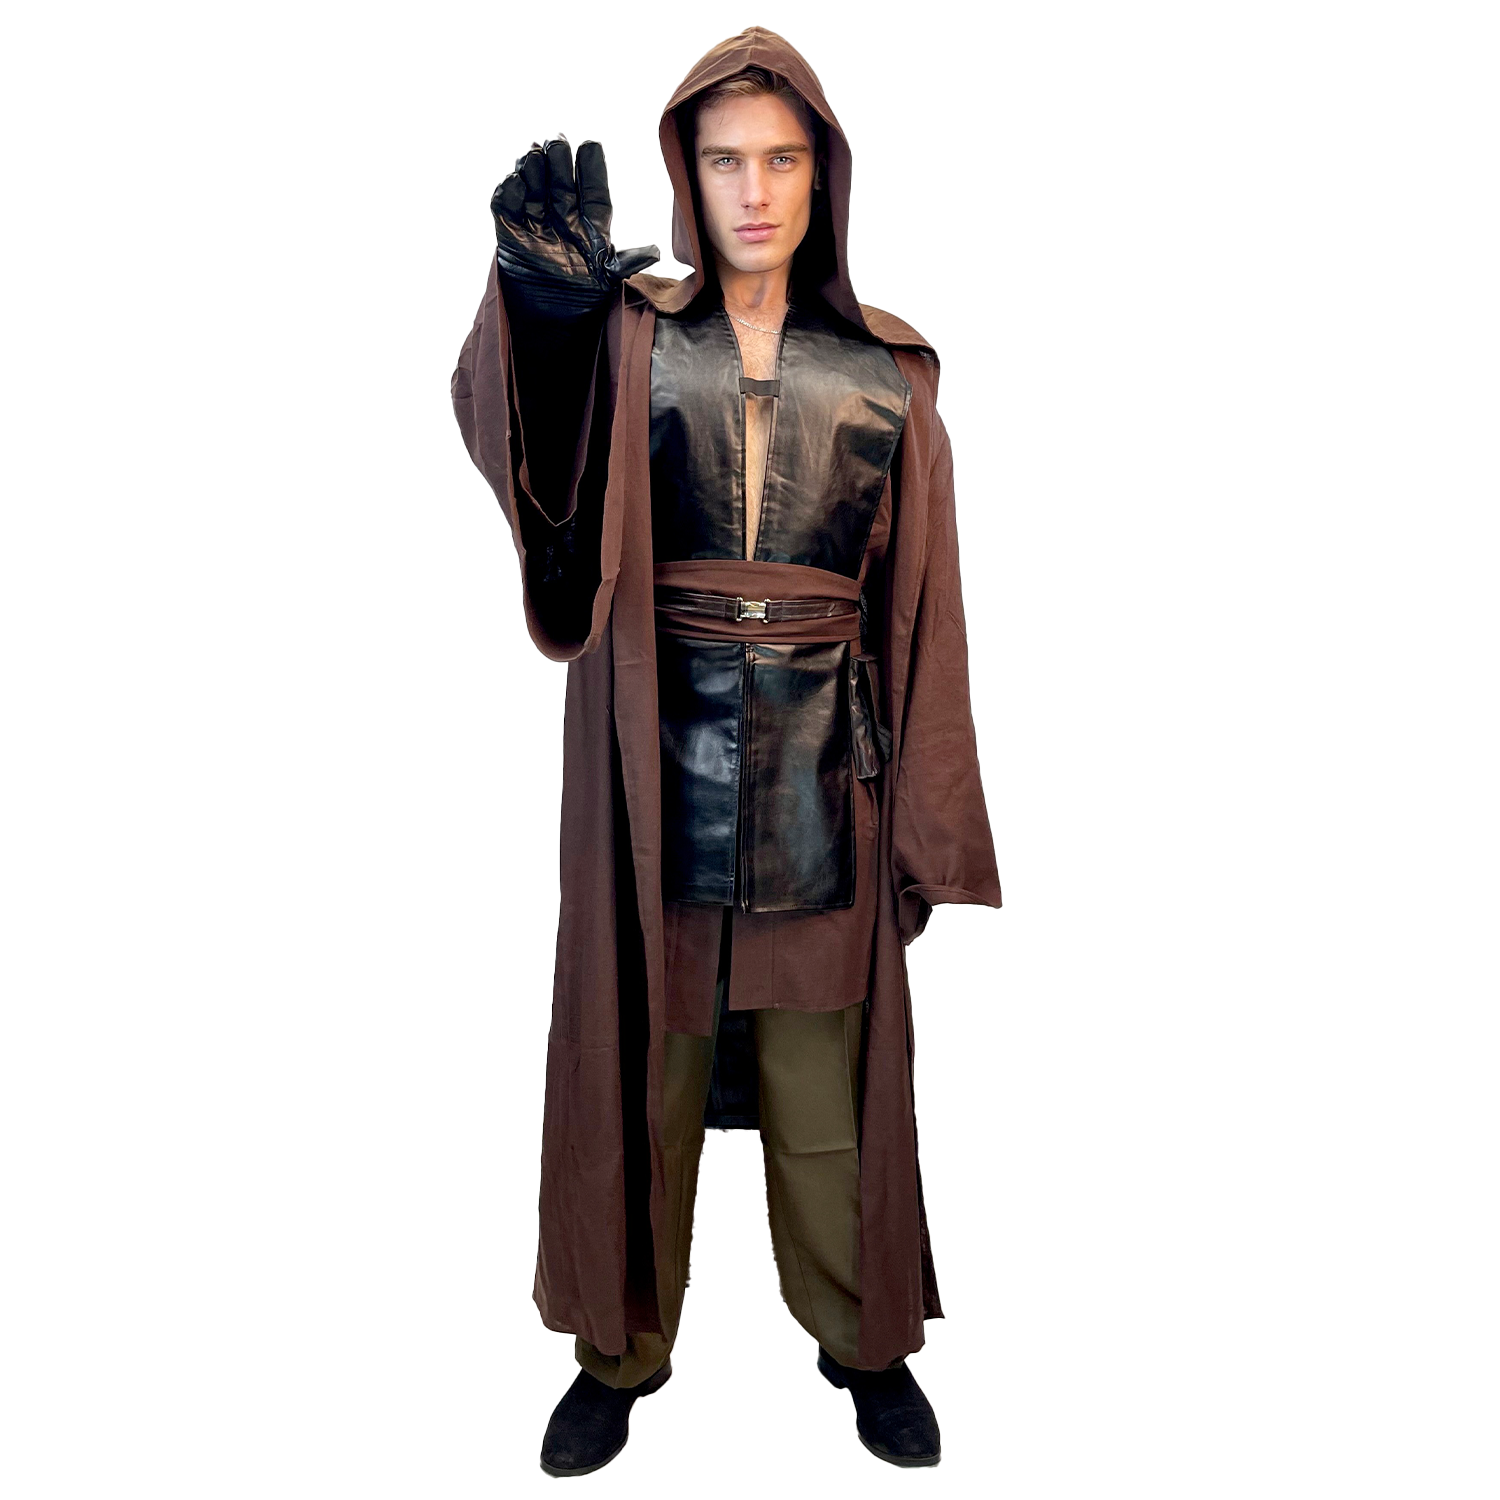 Anakin Skywalker Professional Cosplay Adult Costume